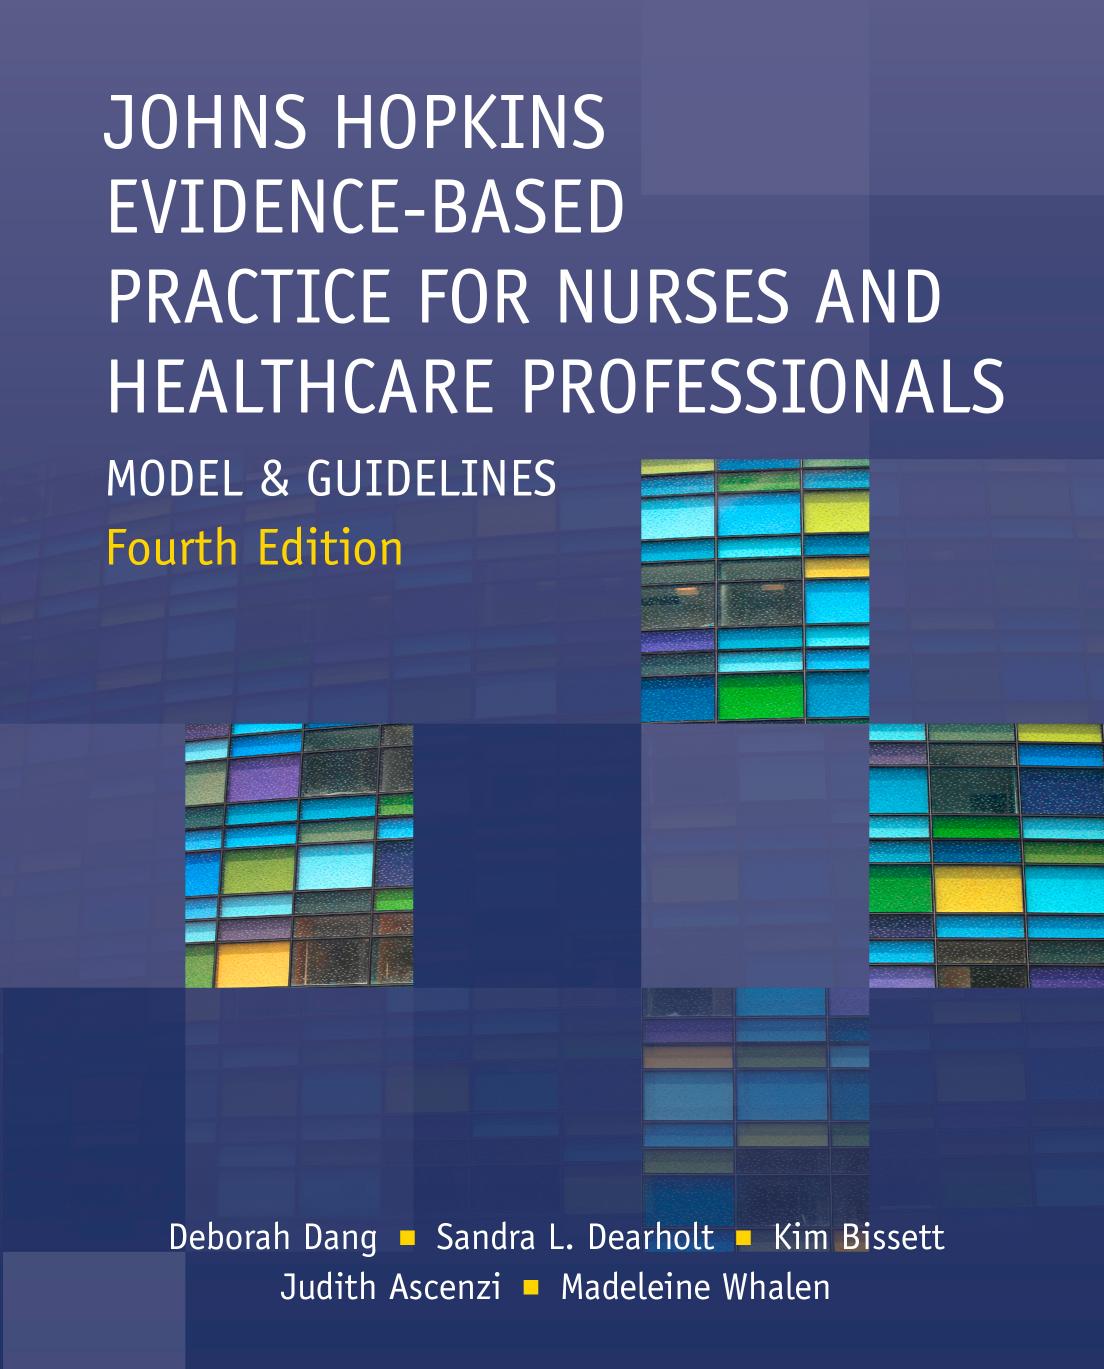 Johns Hopkins Evidence-Based Practice for Nurses and Healthcare Professionals, Fourth Edition by Deborah Dang;Sandra L. Dearholt;Kim Bissett;Judith Ascenzi;Madeleine Whalen;